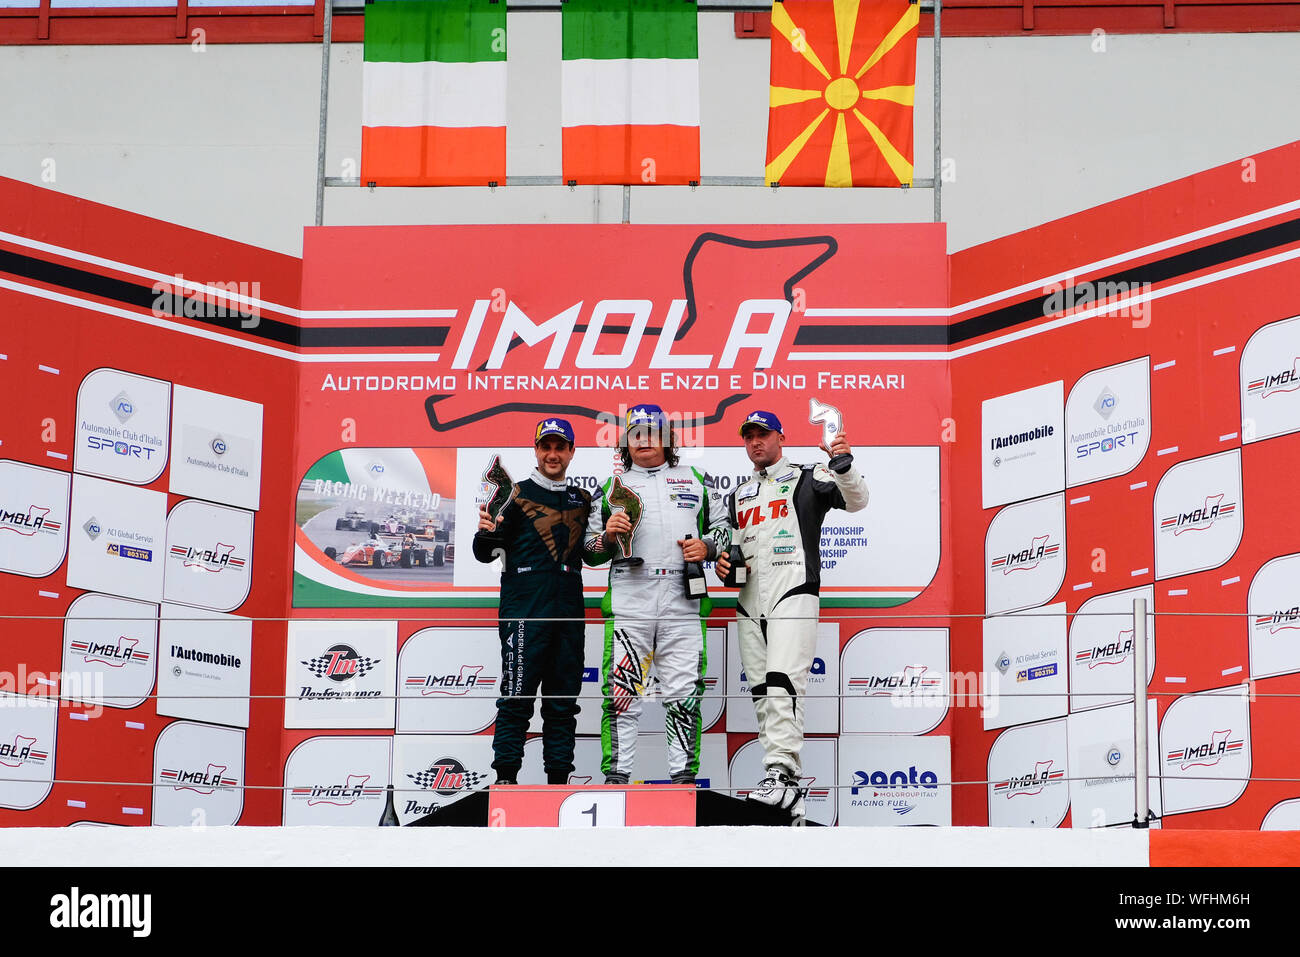 IL PODIO DI GARA 1 während des Tcr Italien Touring Car Championship (Race 1), Imola, Italien, 31. August 2019, Motoren Grand Tourismus Stockfoto